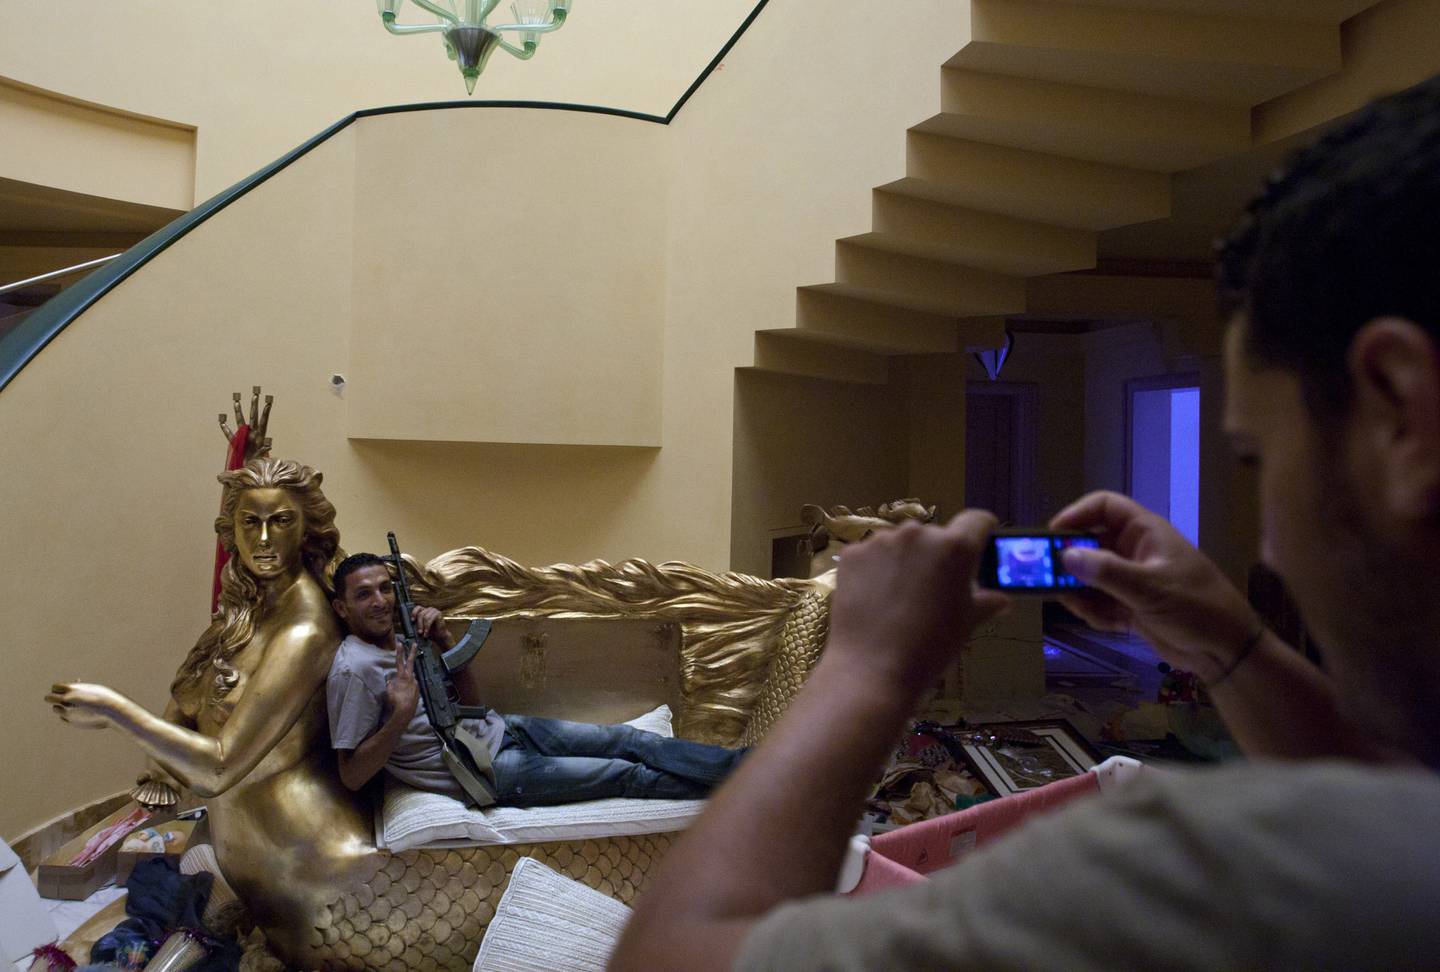 Opprørere inne i huset til Muammar Gaddafis datter Aisha. Havfrue-sofaen har Aisha Gaddafis ansikt.